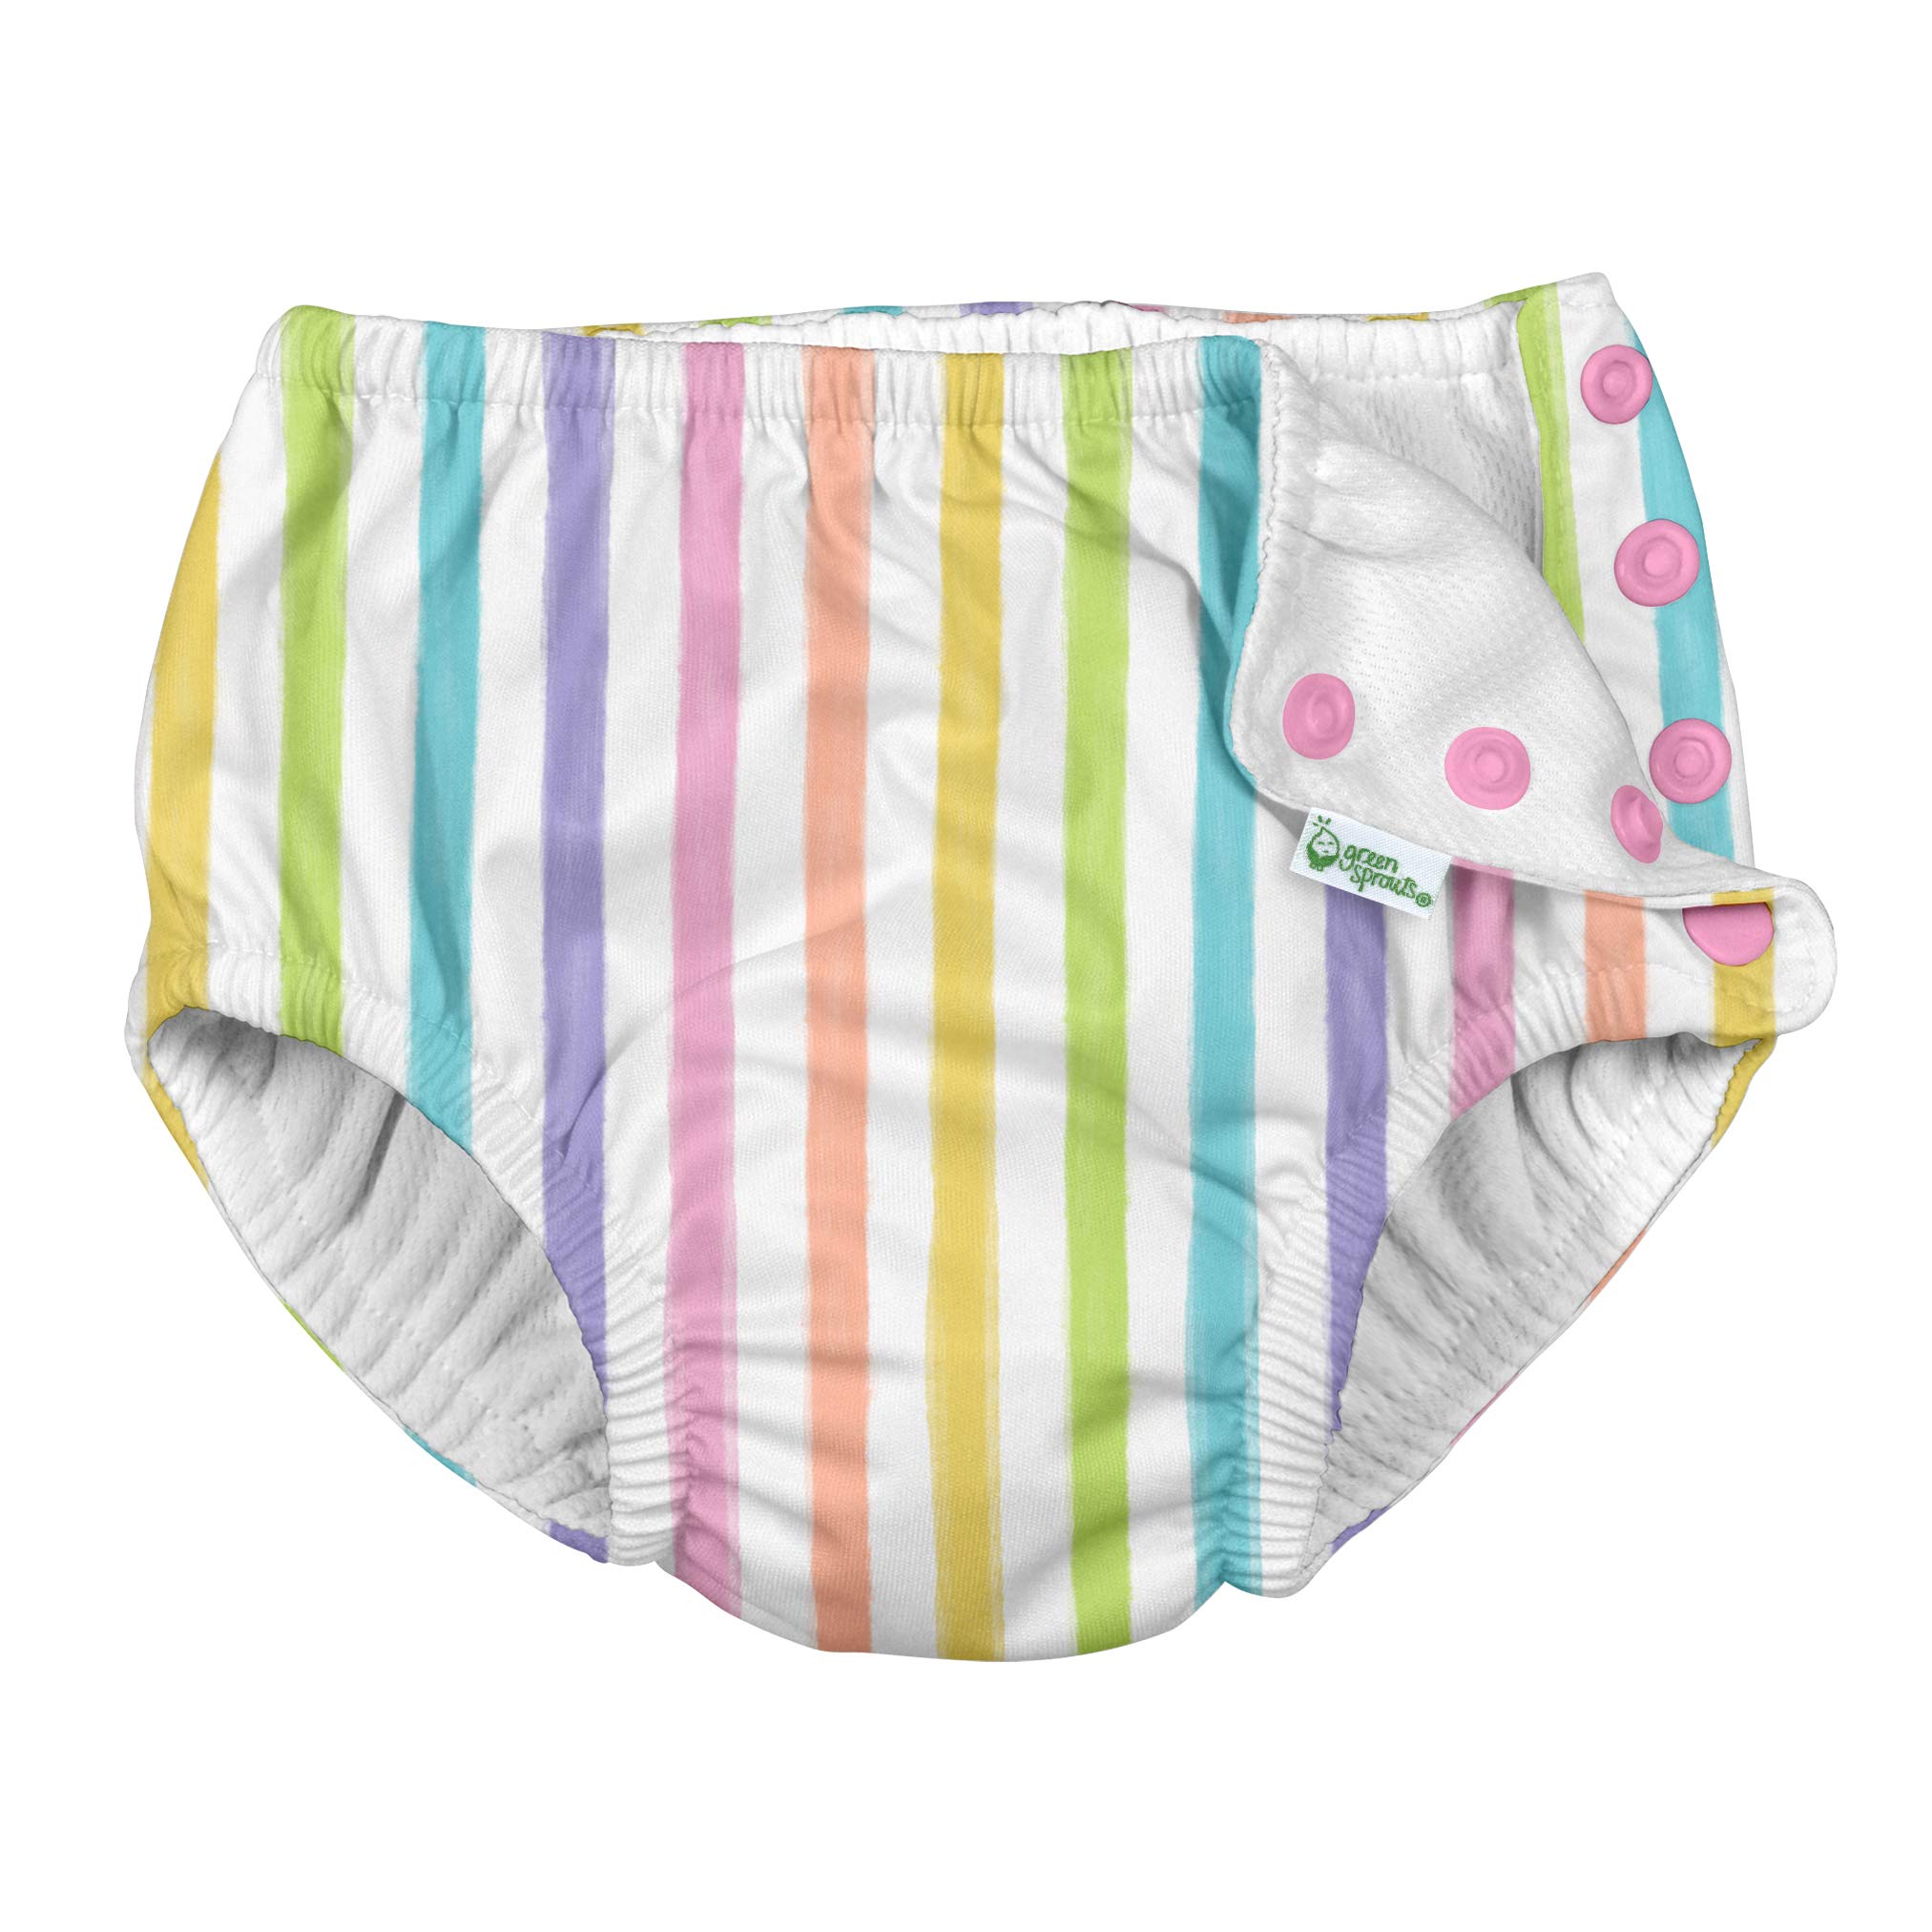 Girls' Snap Reusable Absorbent Swimsuit Diaper